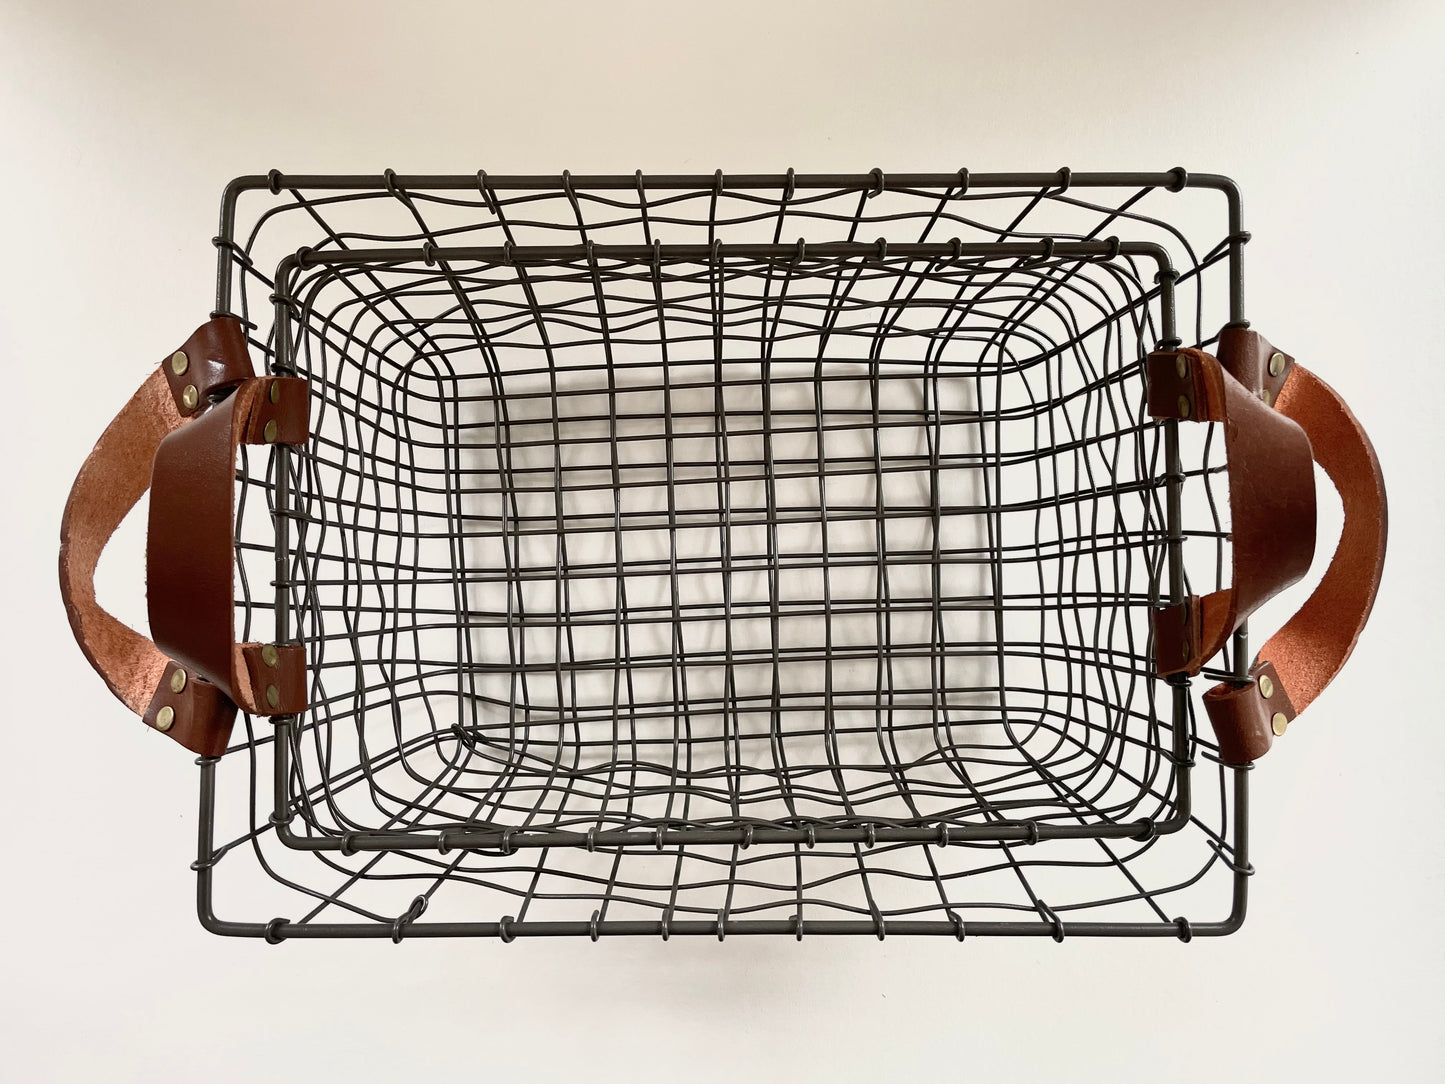 woven rectangular iron fruit basket with leather handles